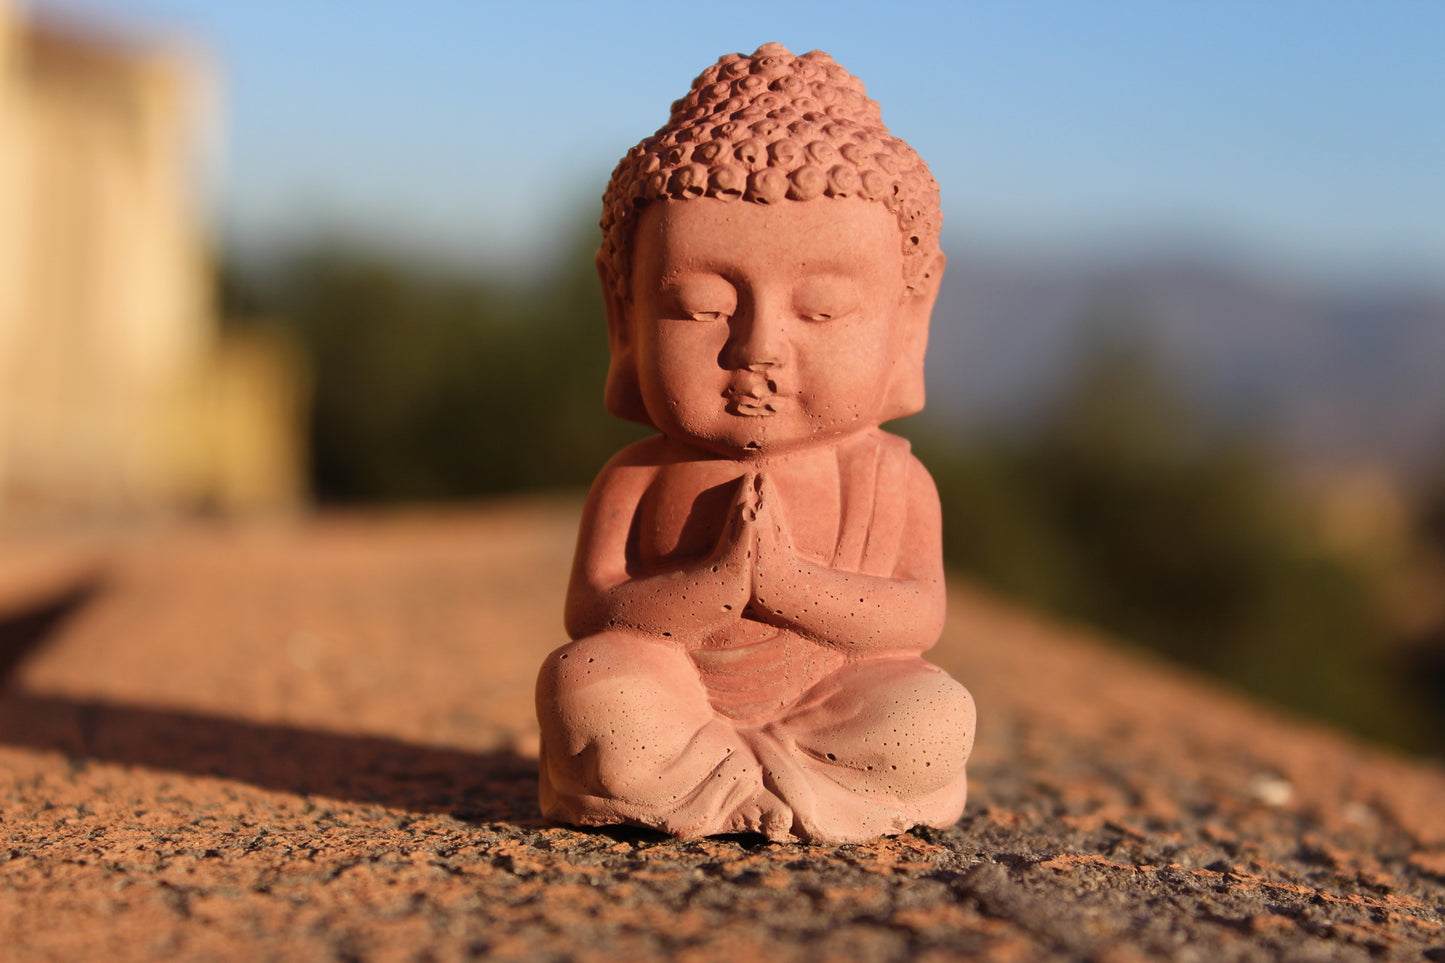 Colorful Buddha Figurine | Concrete Anjali Buddha | Namaste Figurine